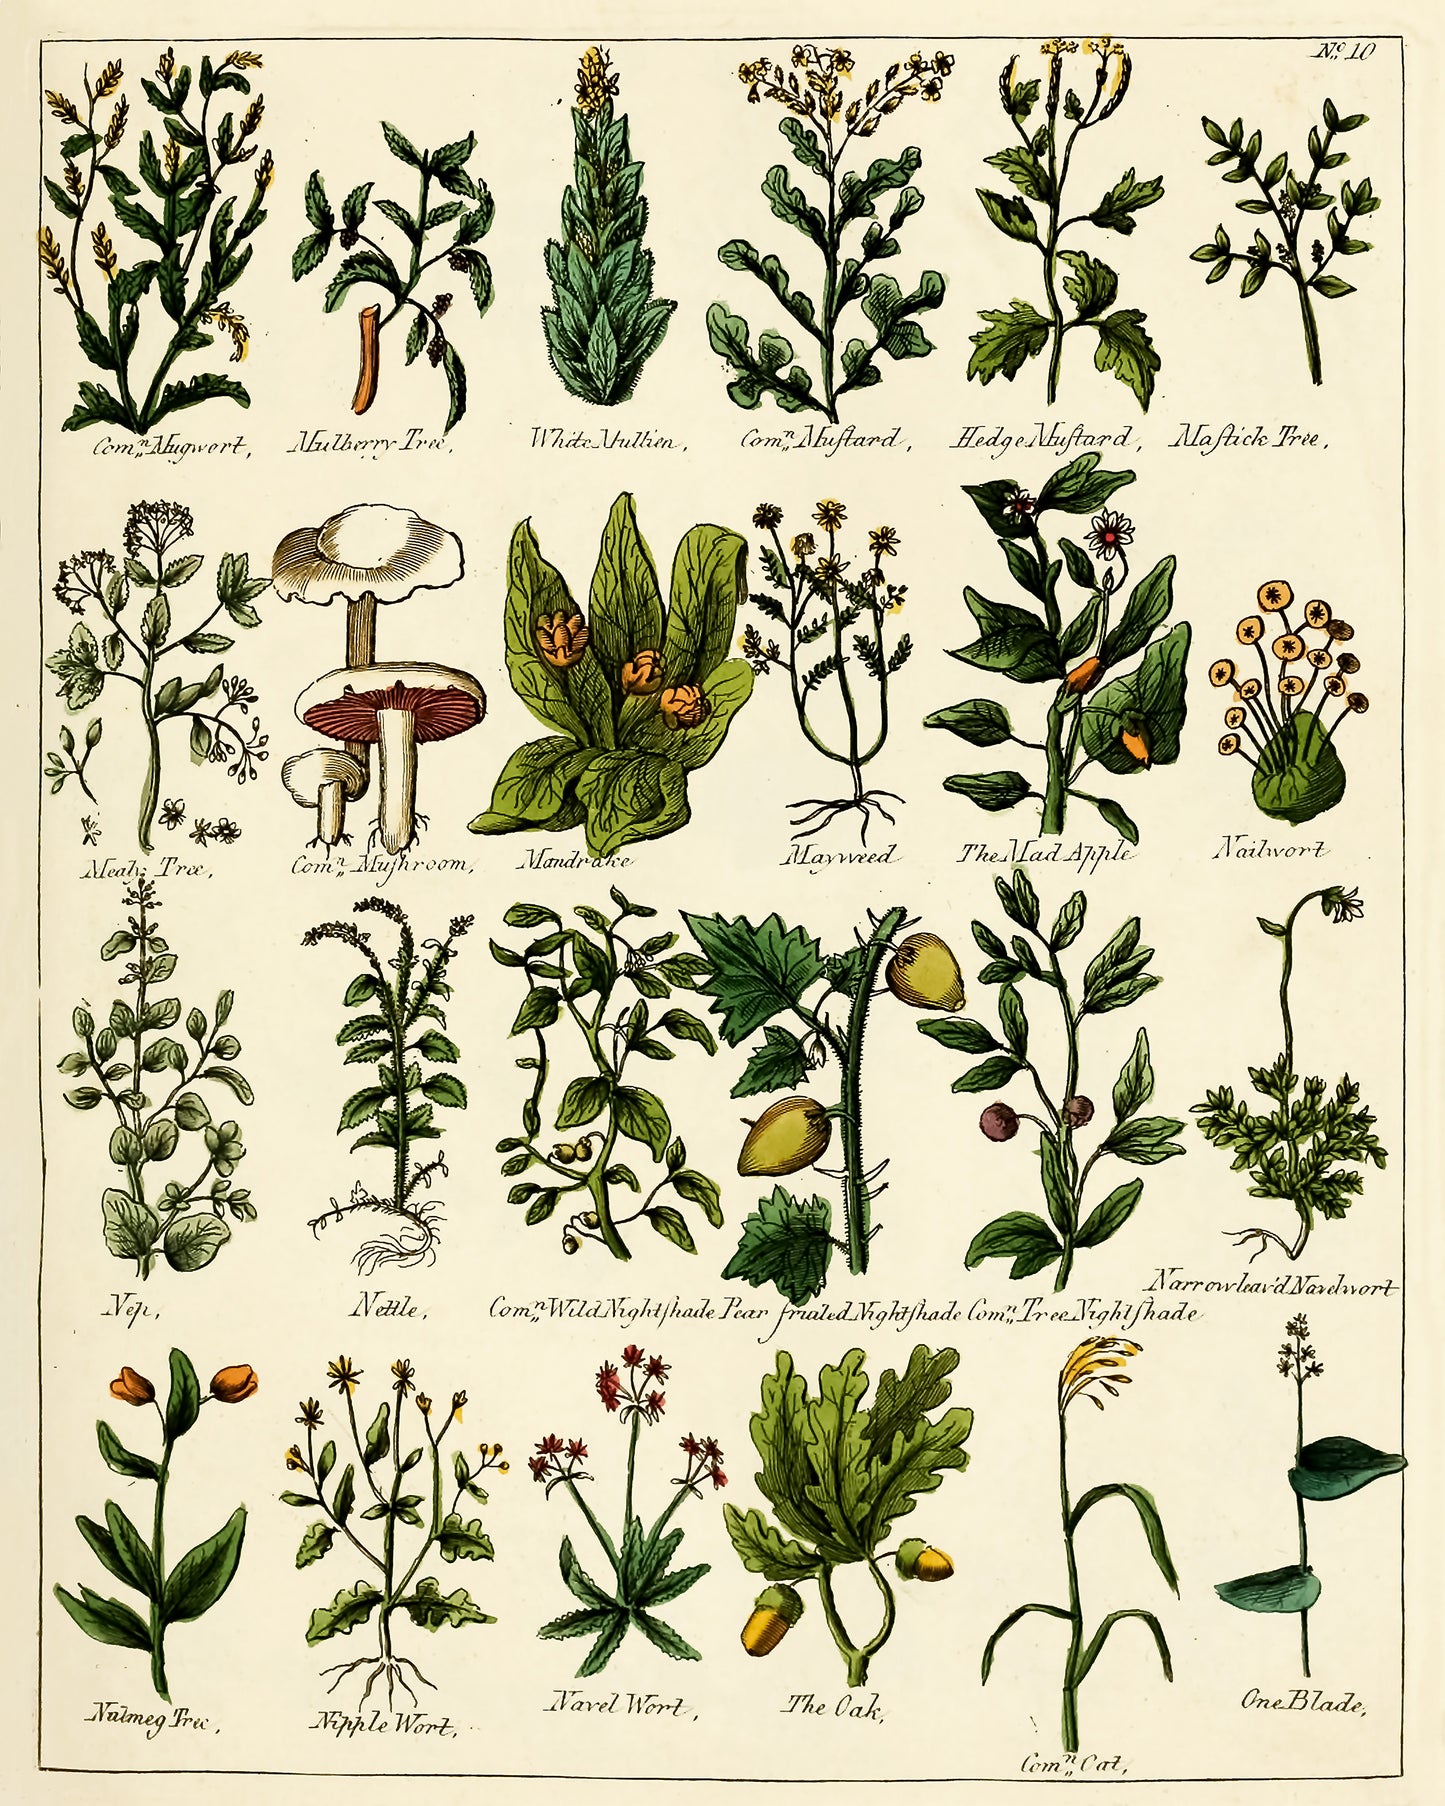 Culpeper's Complete Herbal [28 Images]